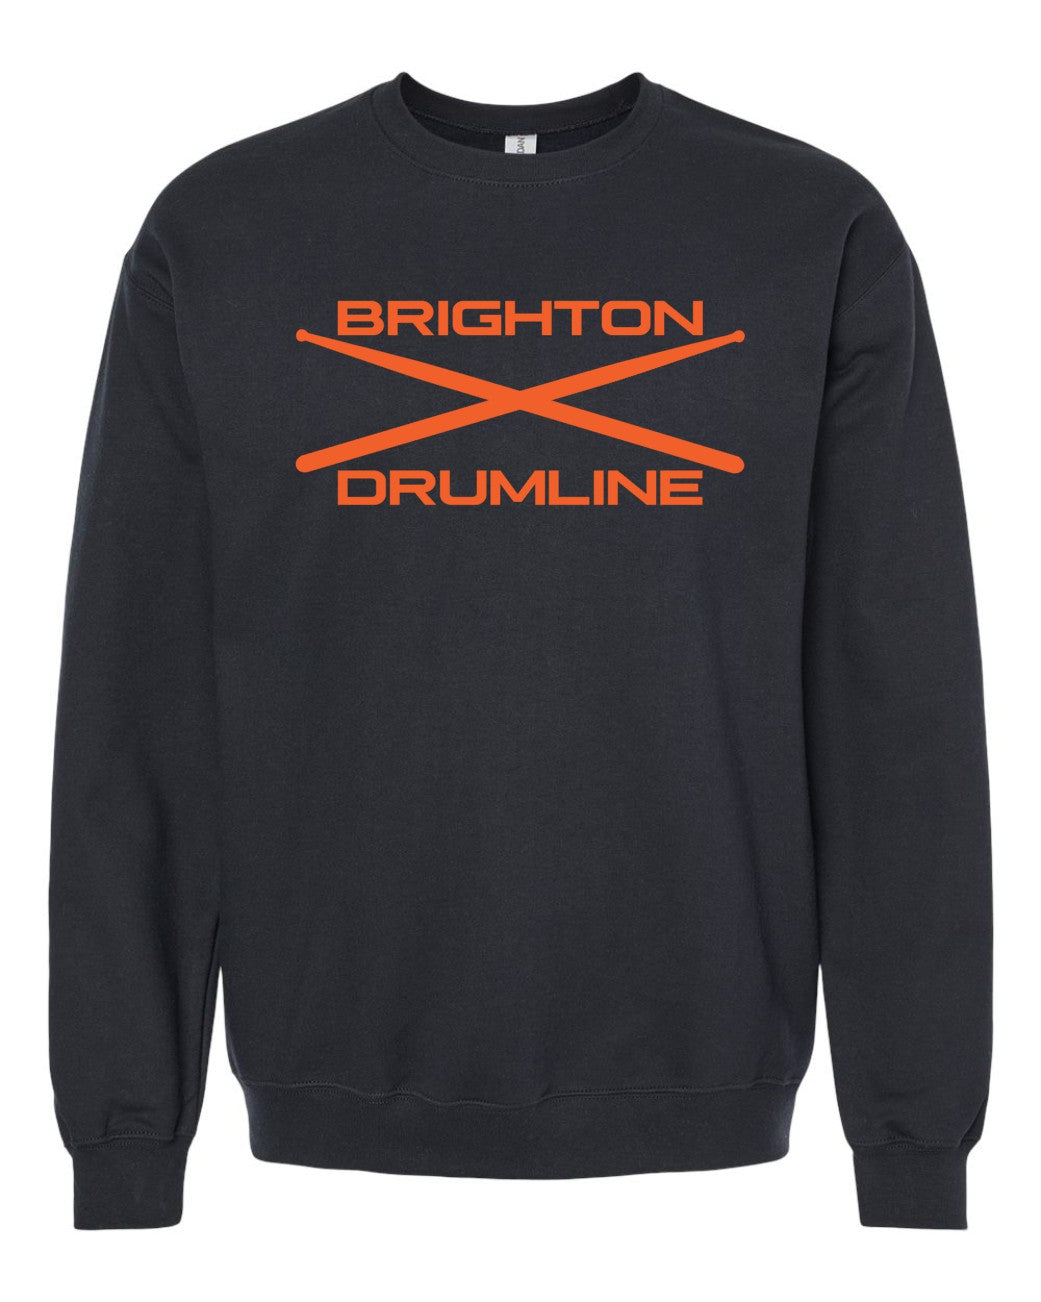 Drumline "Sticks" Crewneck Sweatshirt